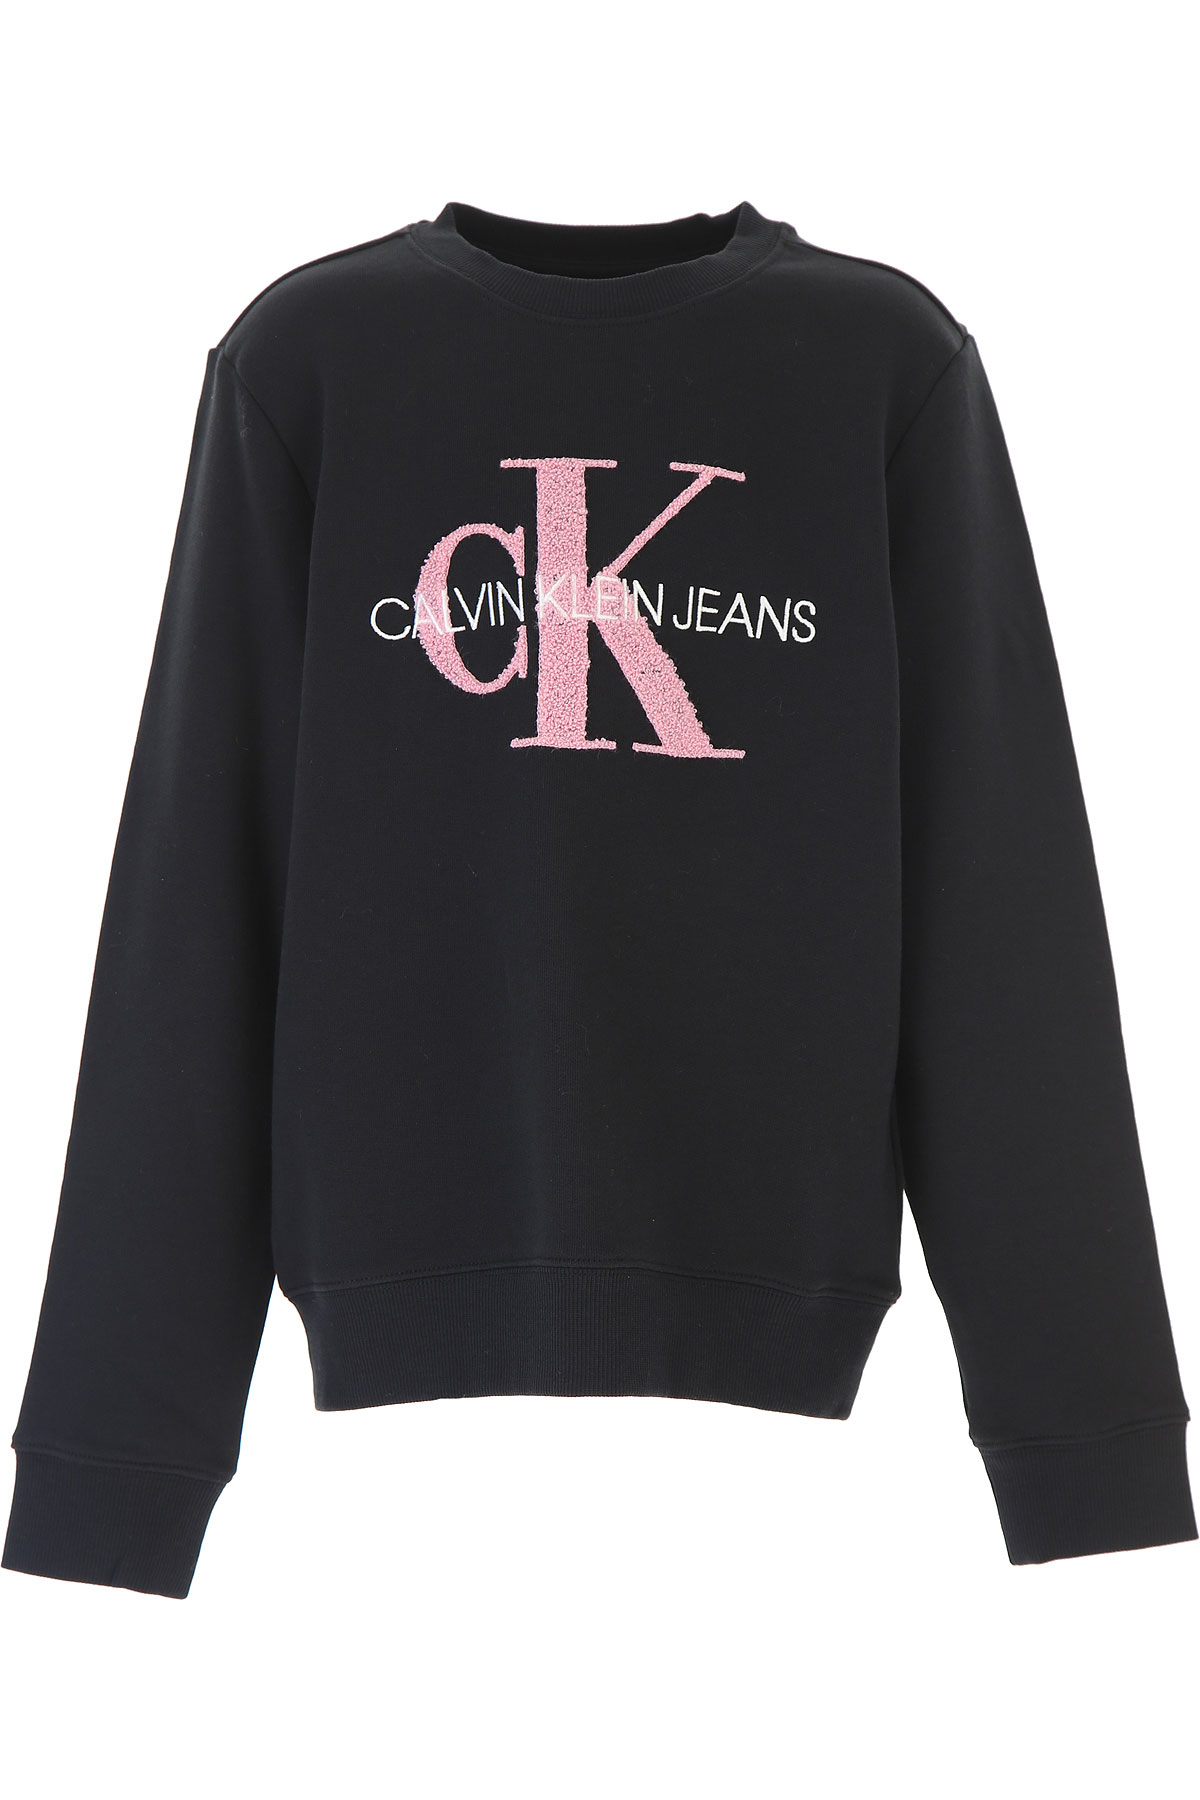 Girls Clothing Calvin Klein, Style code: ig0ig00178-005-